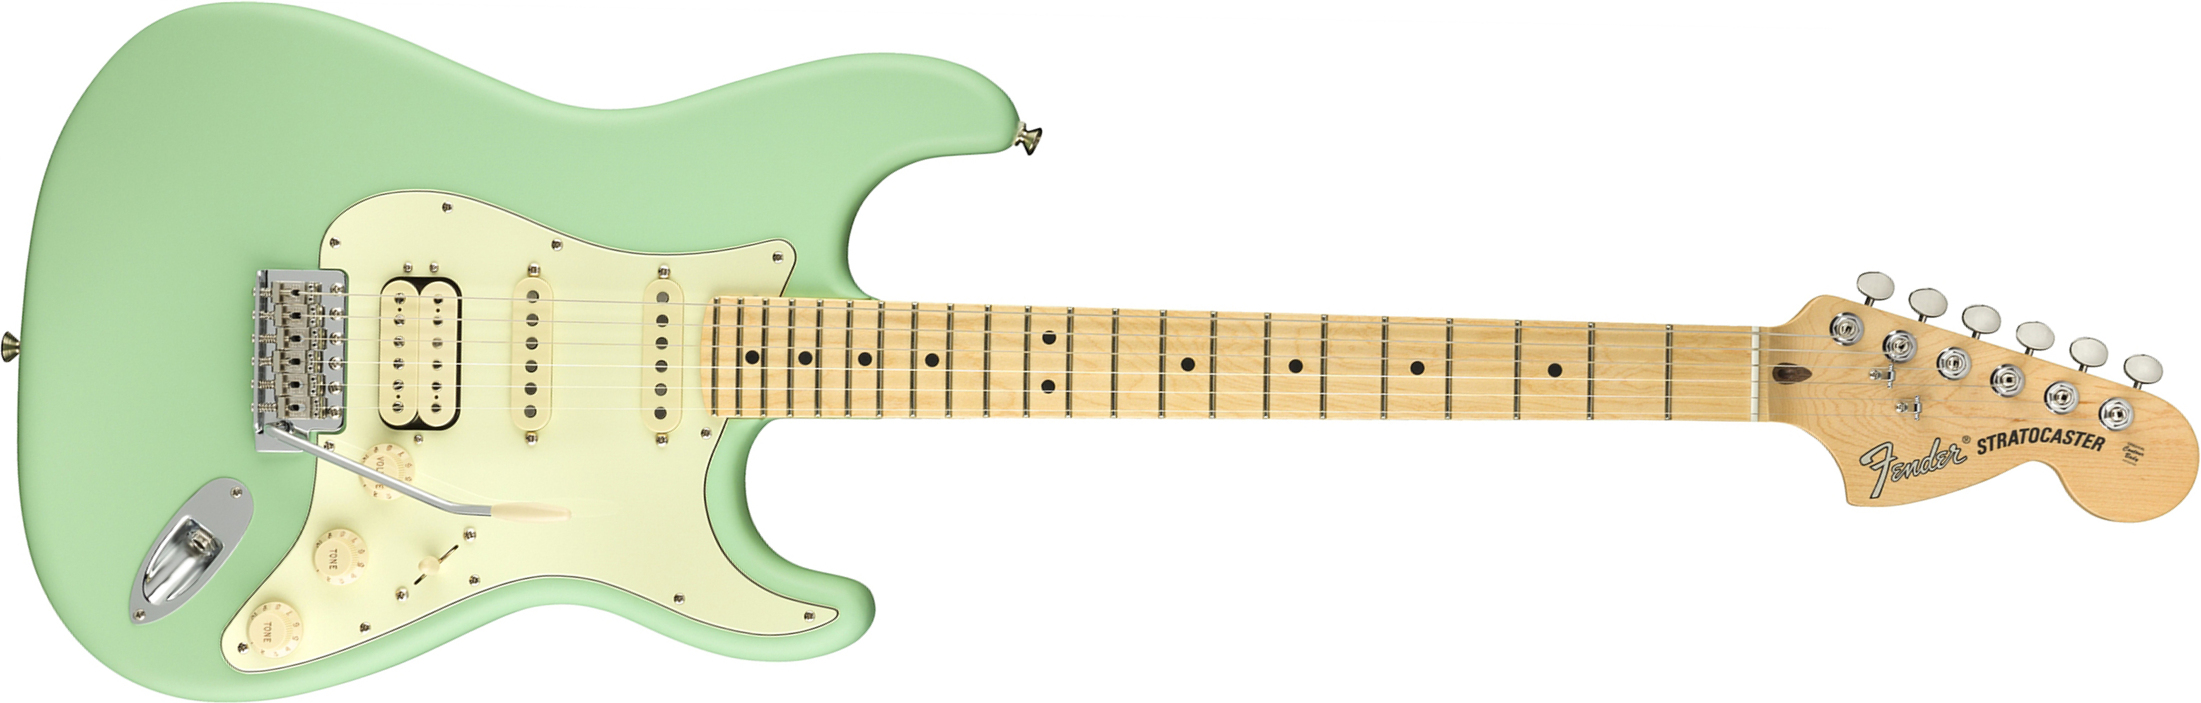 Fender Strat American Performer Usa Hss Mn - Satin Surf Green - Str shape electric guitar - Main picture